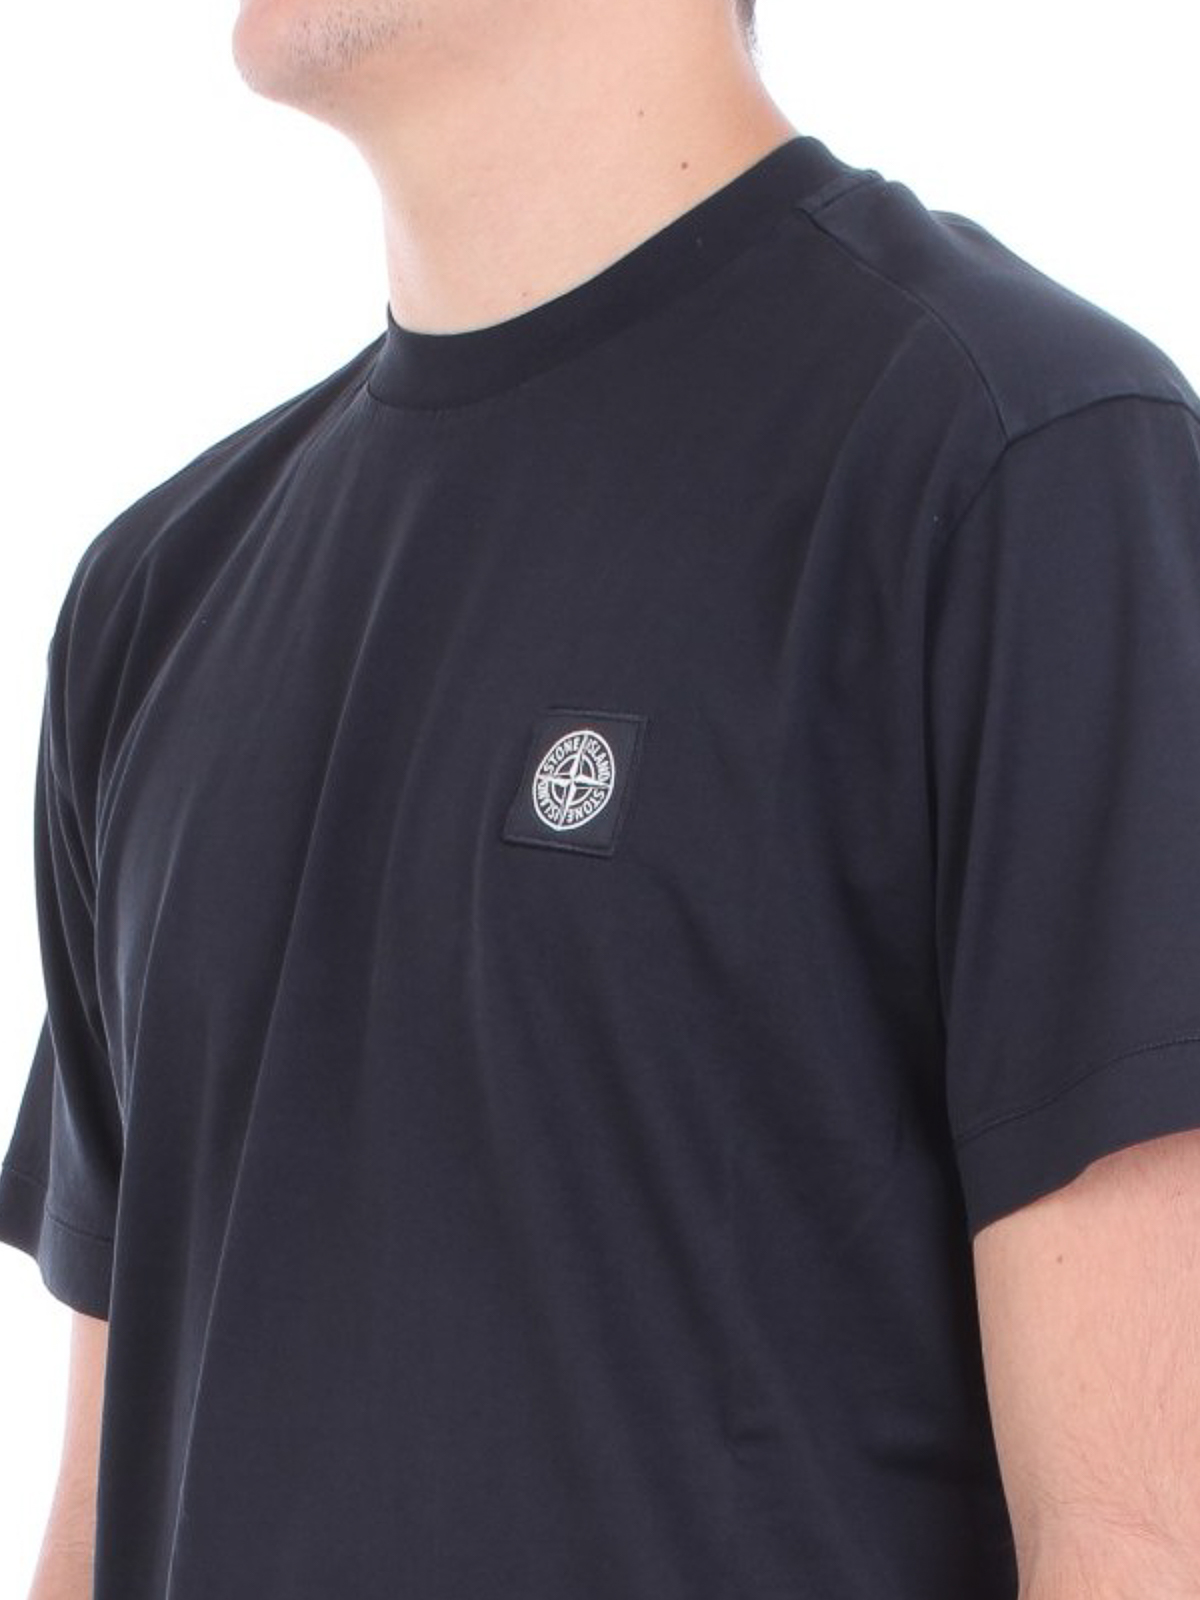 inkt Dertig diagonaal T-shirts Stone Island - Black cotton basic T-shirt - 711524113V0029